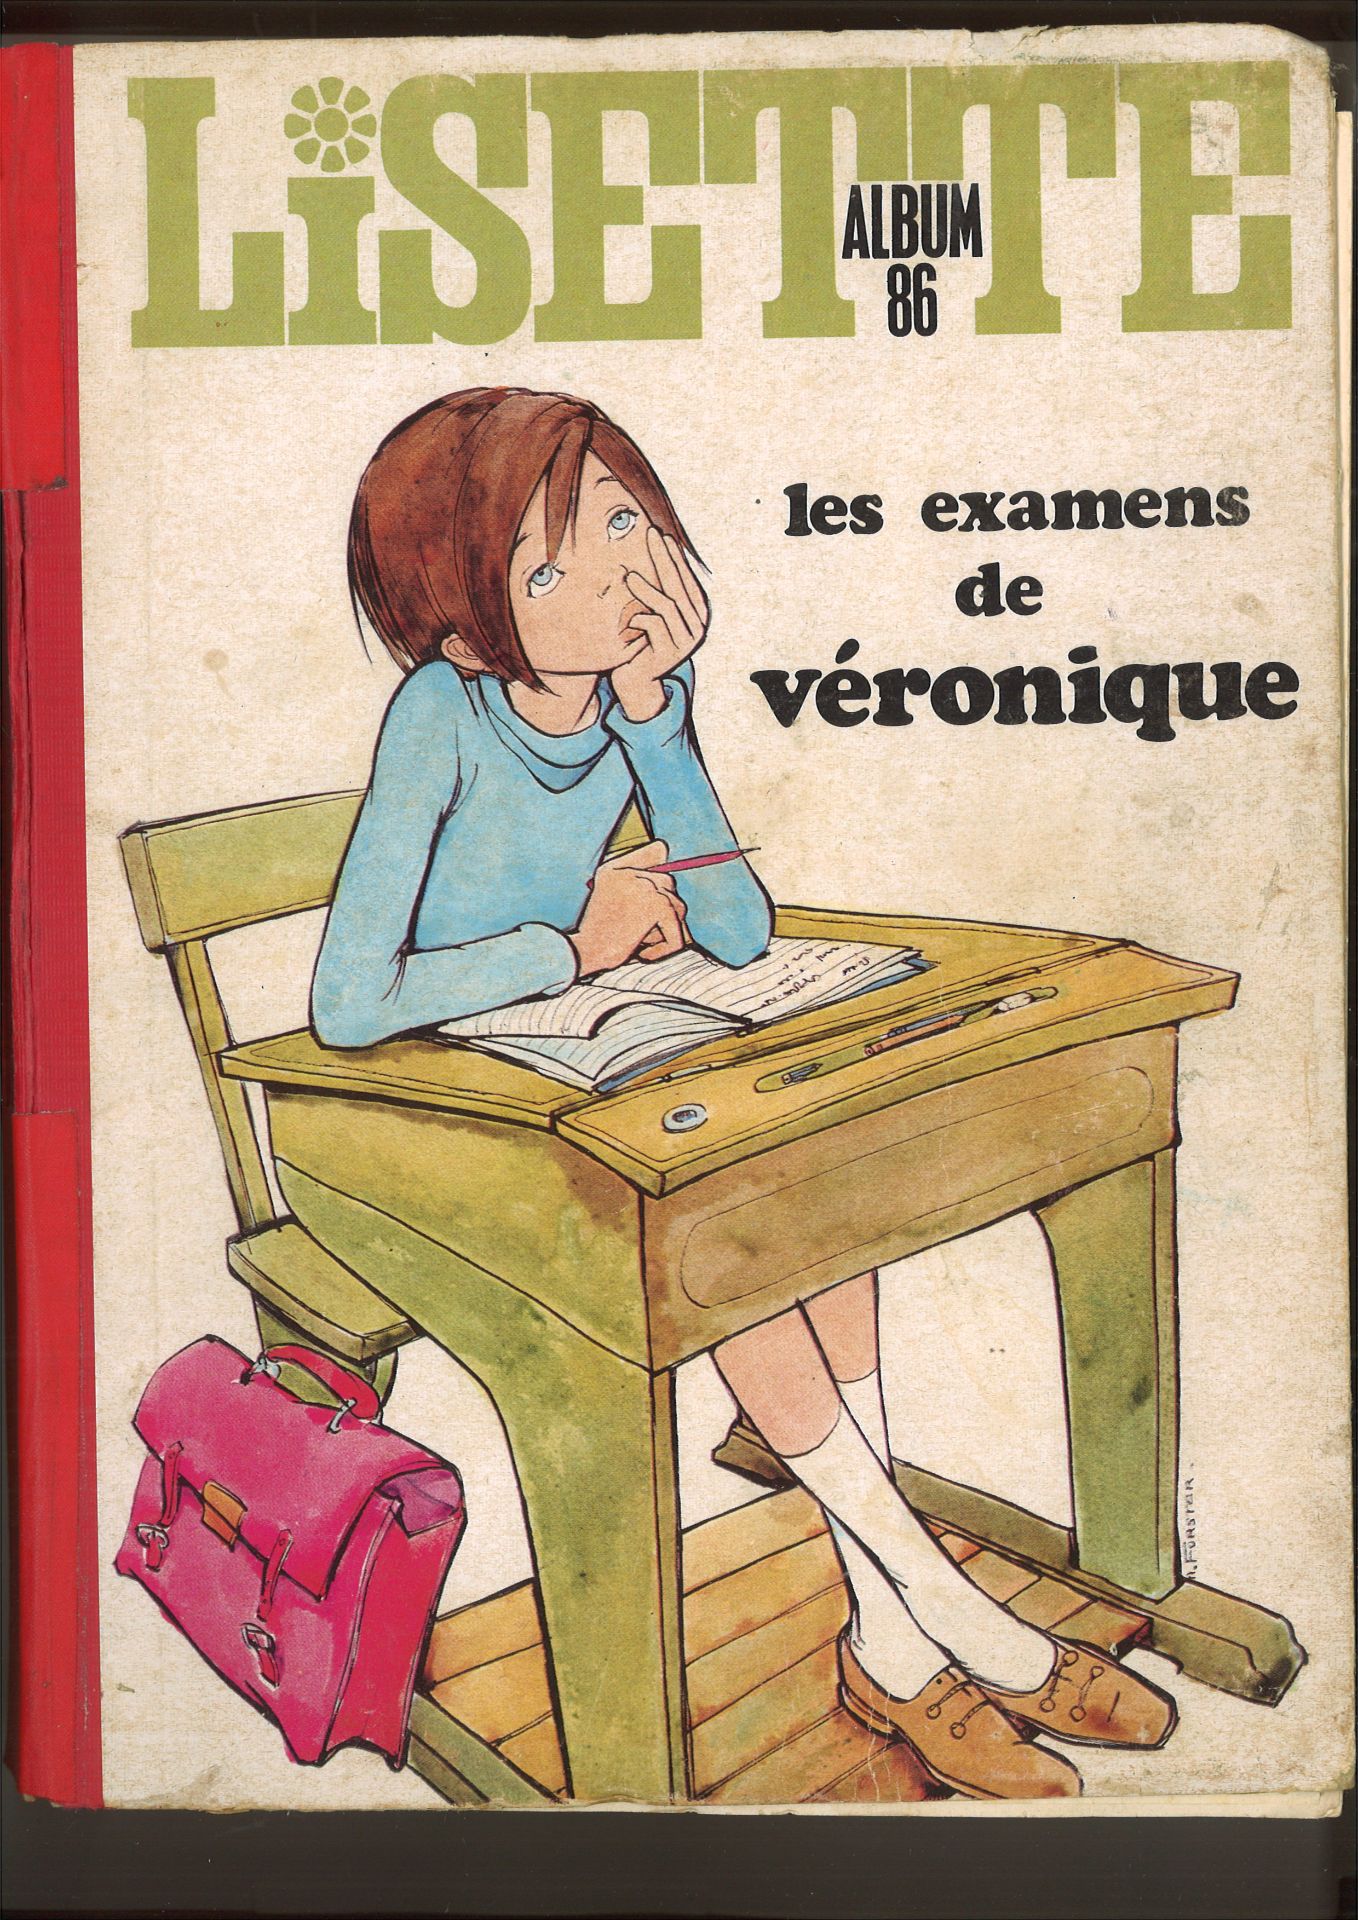 Lisette Album 86, les examens de veronique, April 1970, stark gebrauchter Zustand